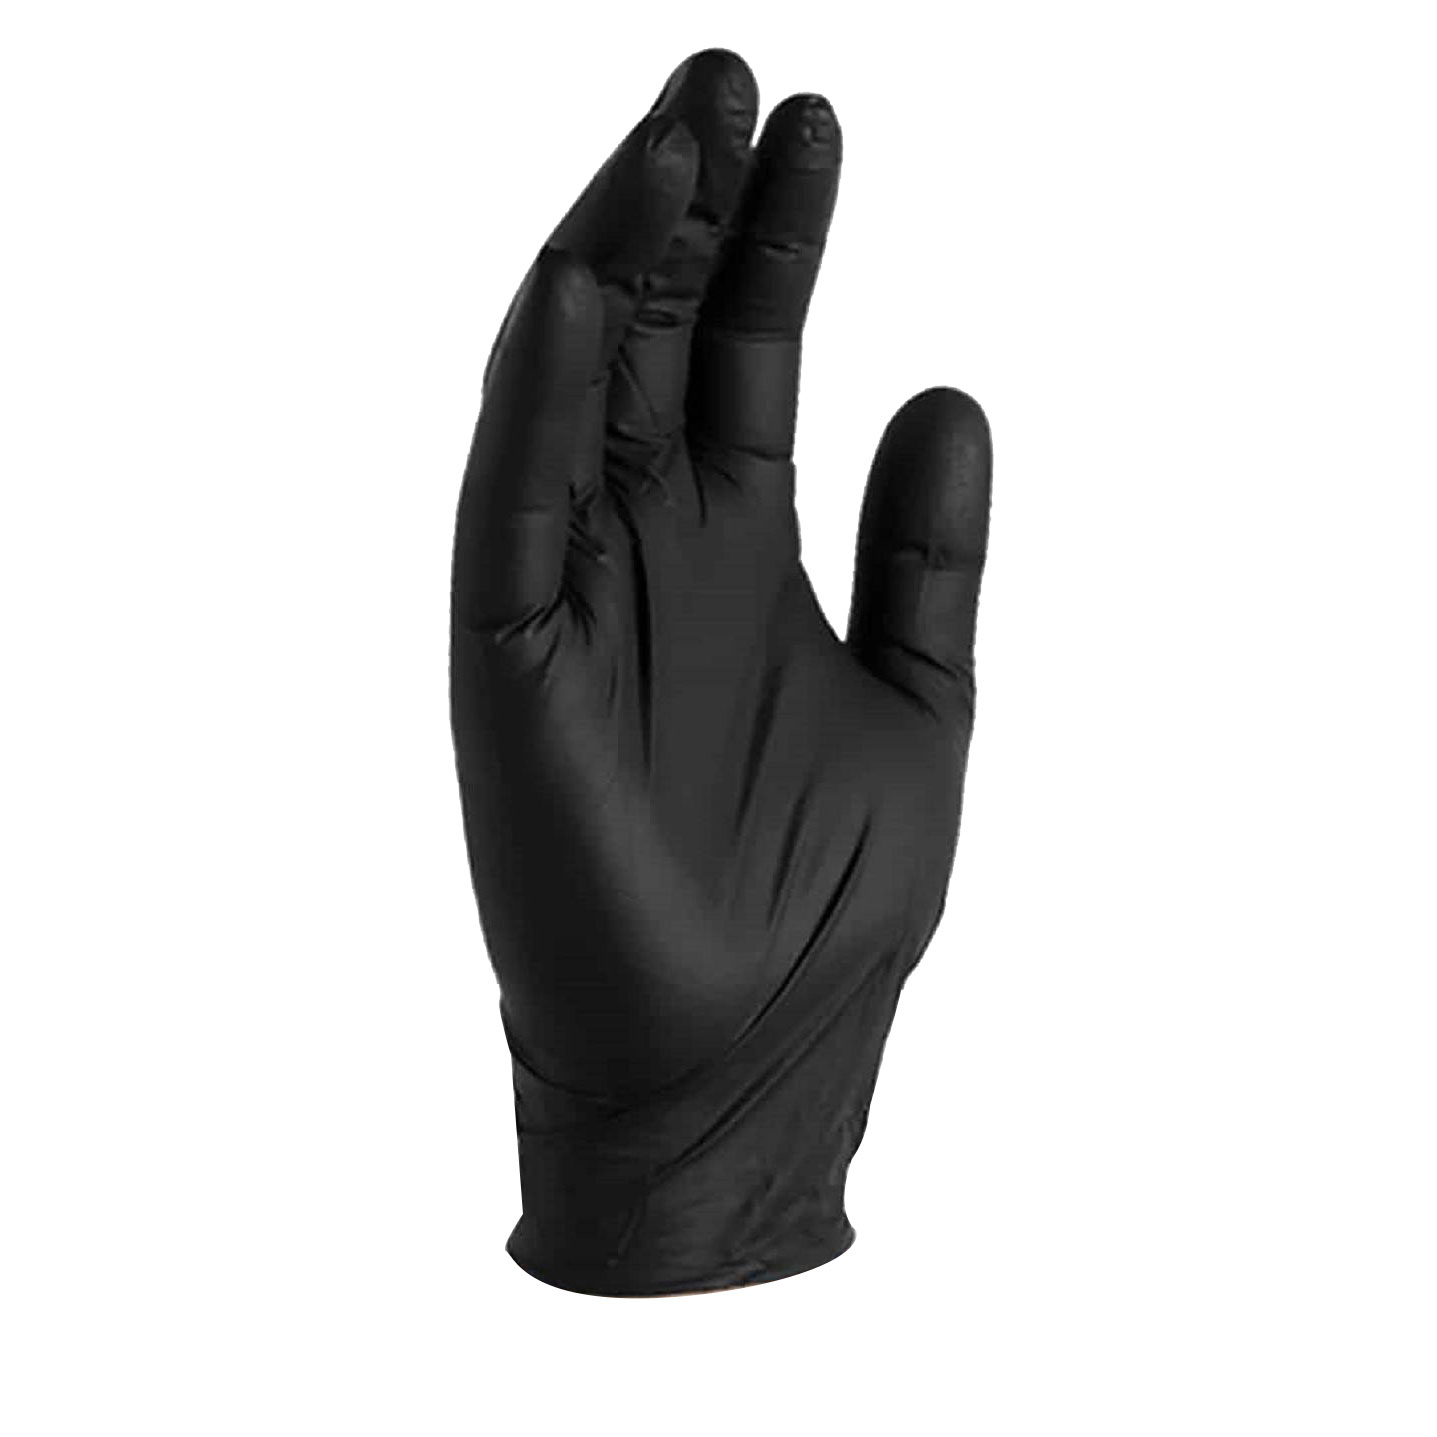 Gloveworks Nitrile Work Gloves, Black, Medium, 100/Box